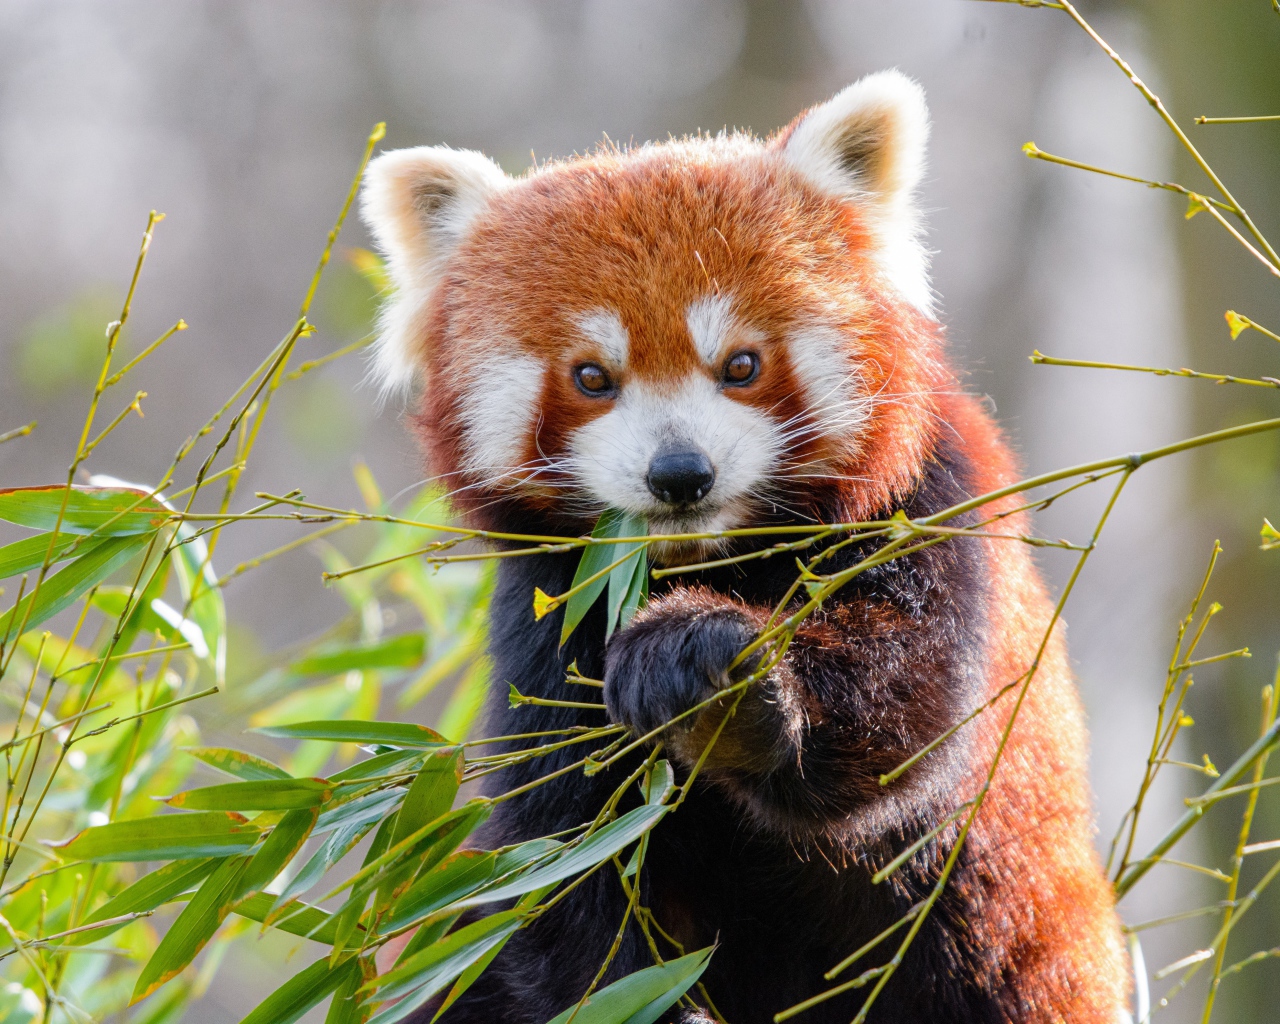 Cute little panda eats bamboo branches.